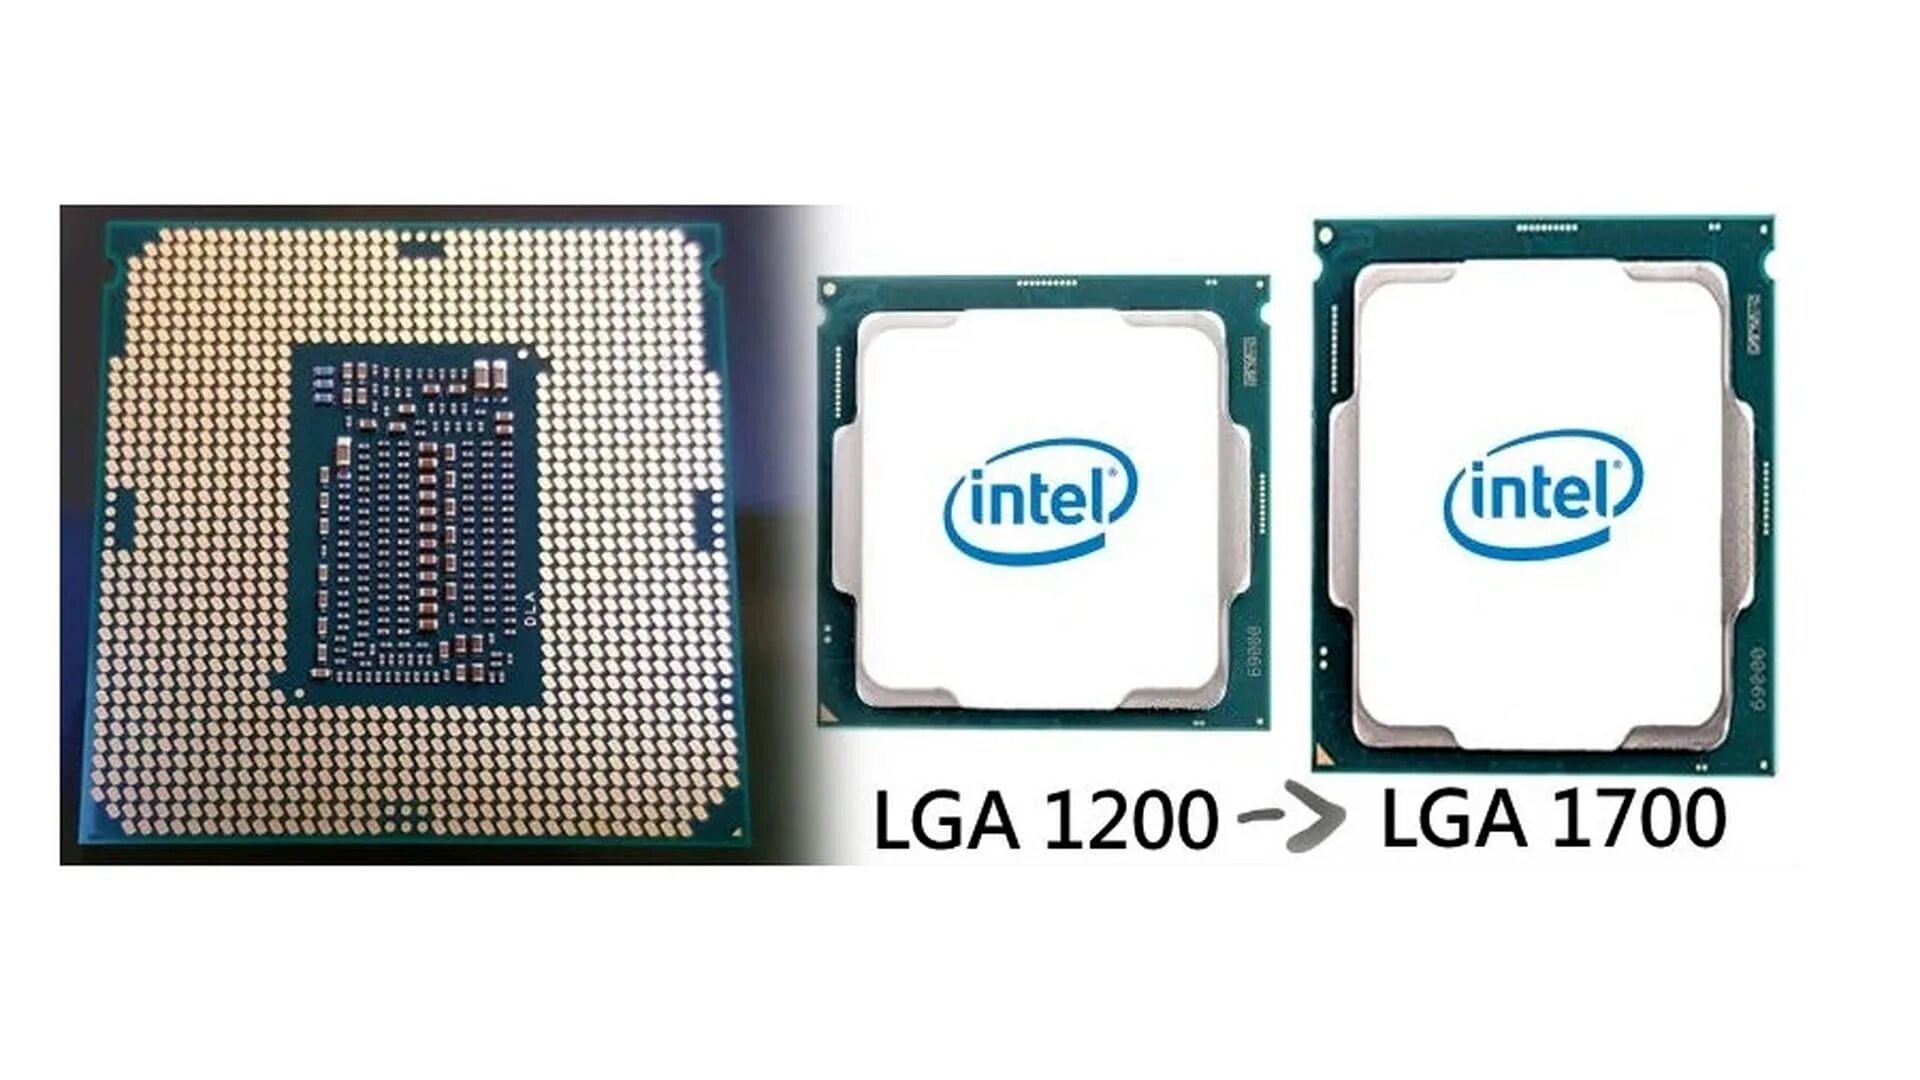 Intel i7 1700